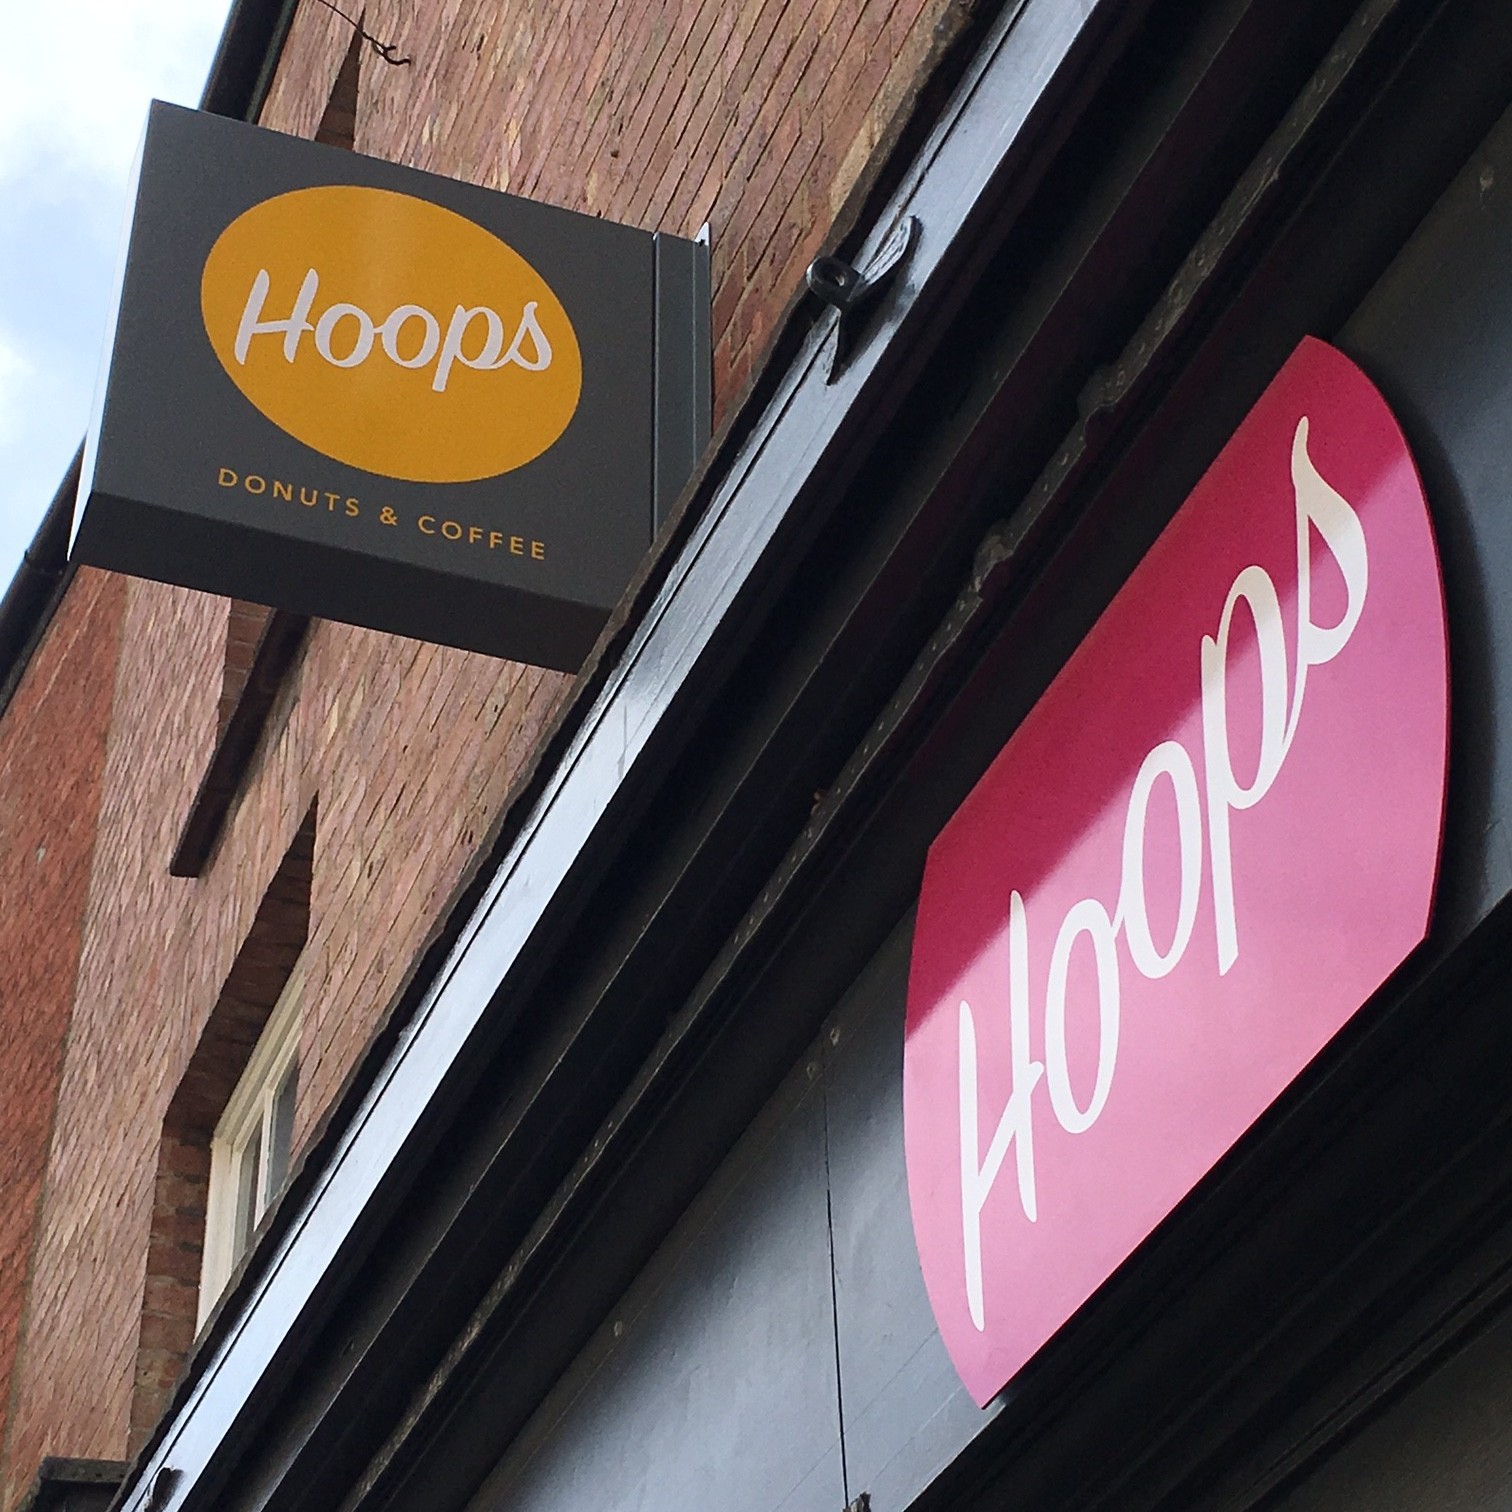 Hoops signage